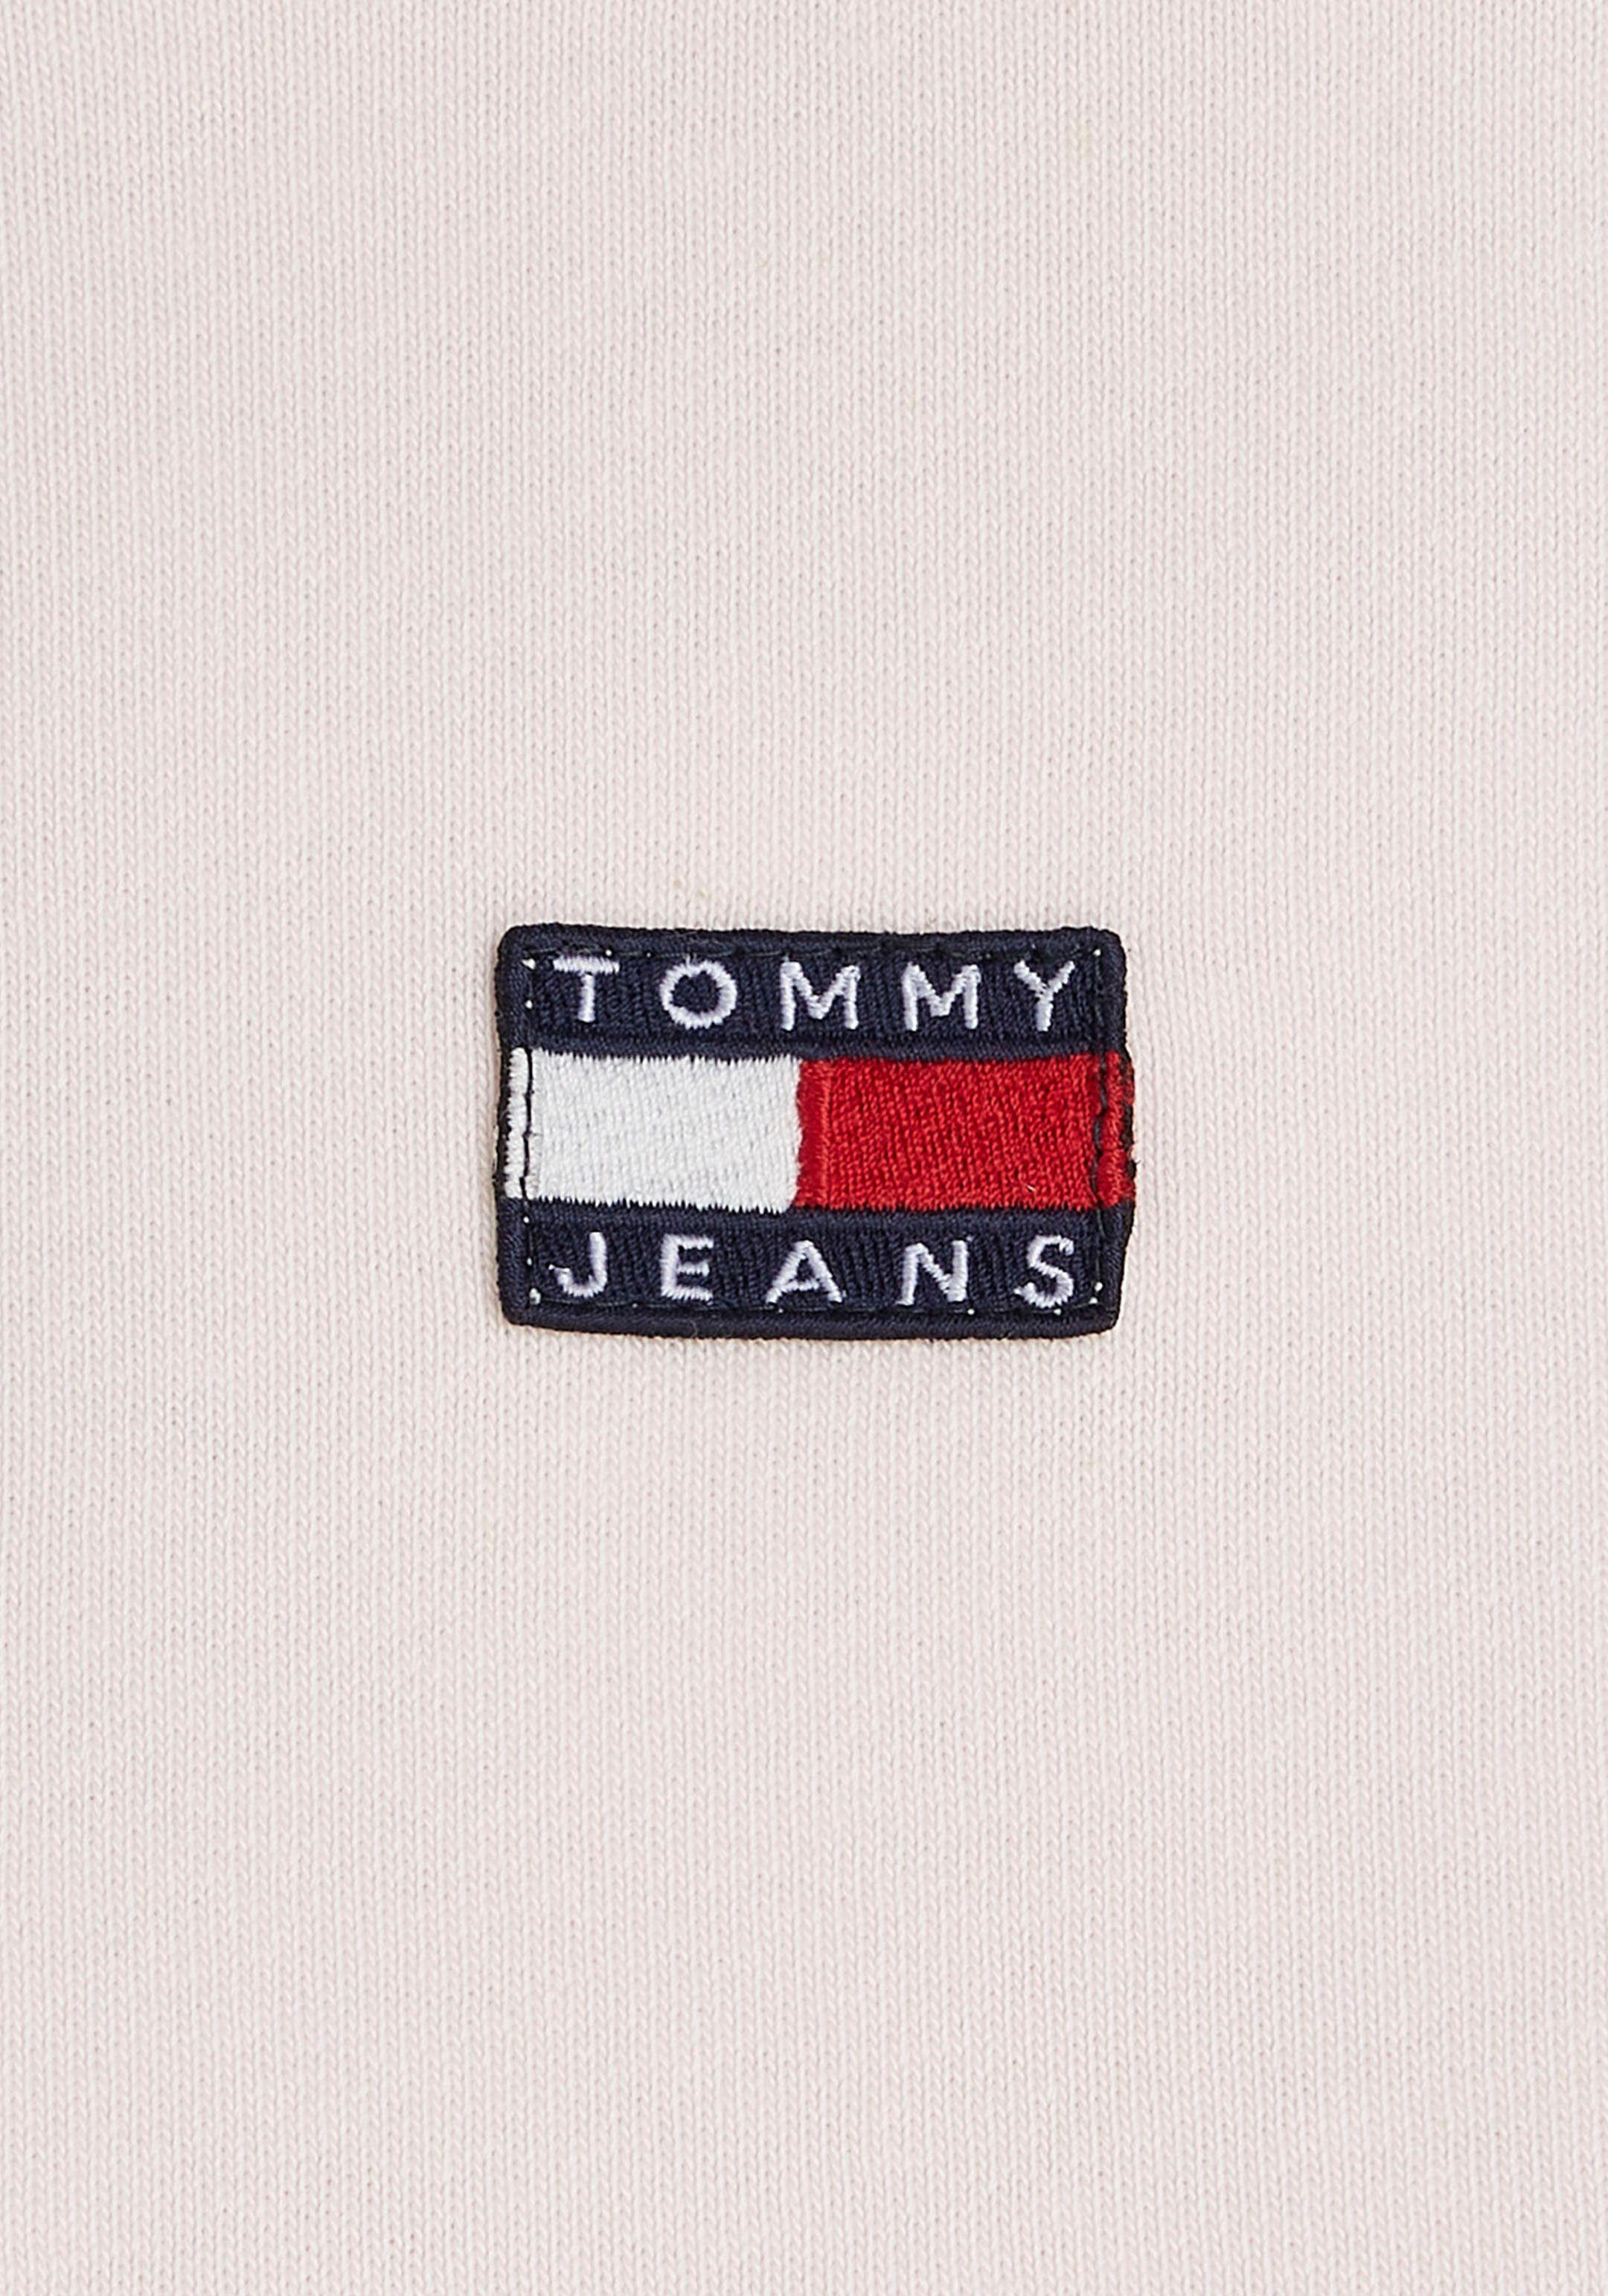 DRESS XS Shirtkleid Faint-Pink Logo-Badge TJW mit Tommy Tommy TEE BADGE Jeans Jeans